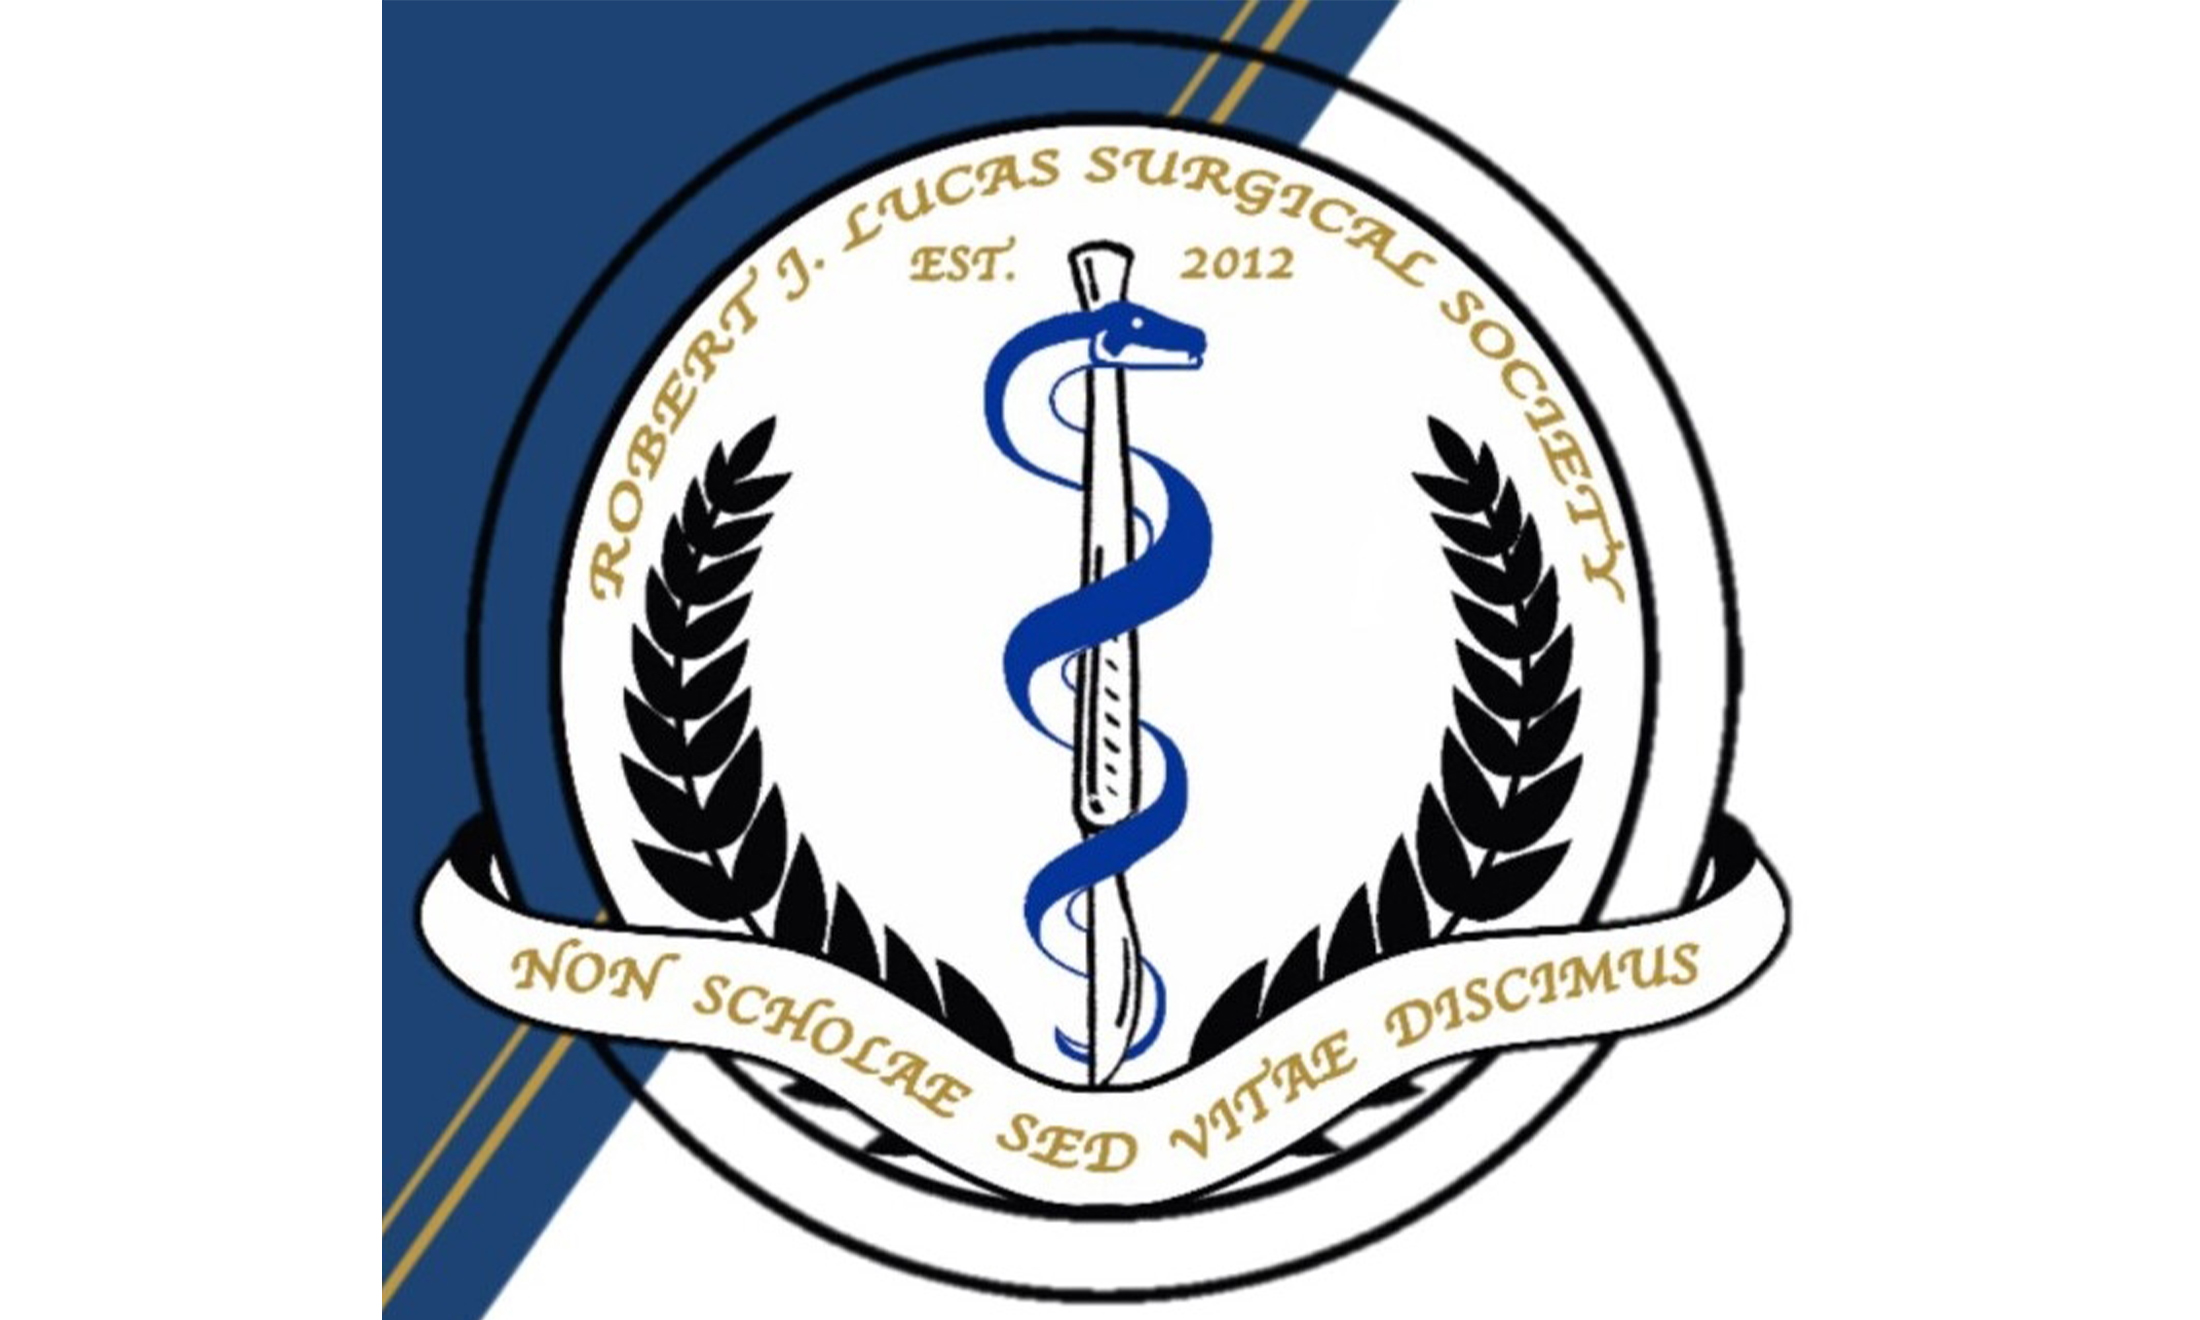 An image of the RJLSS logo